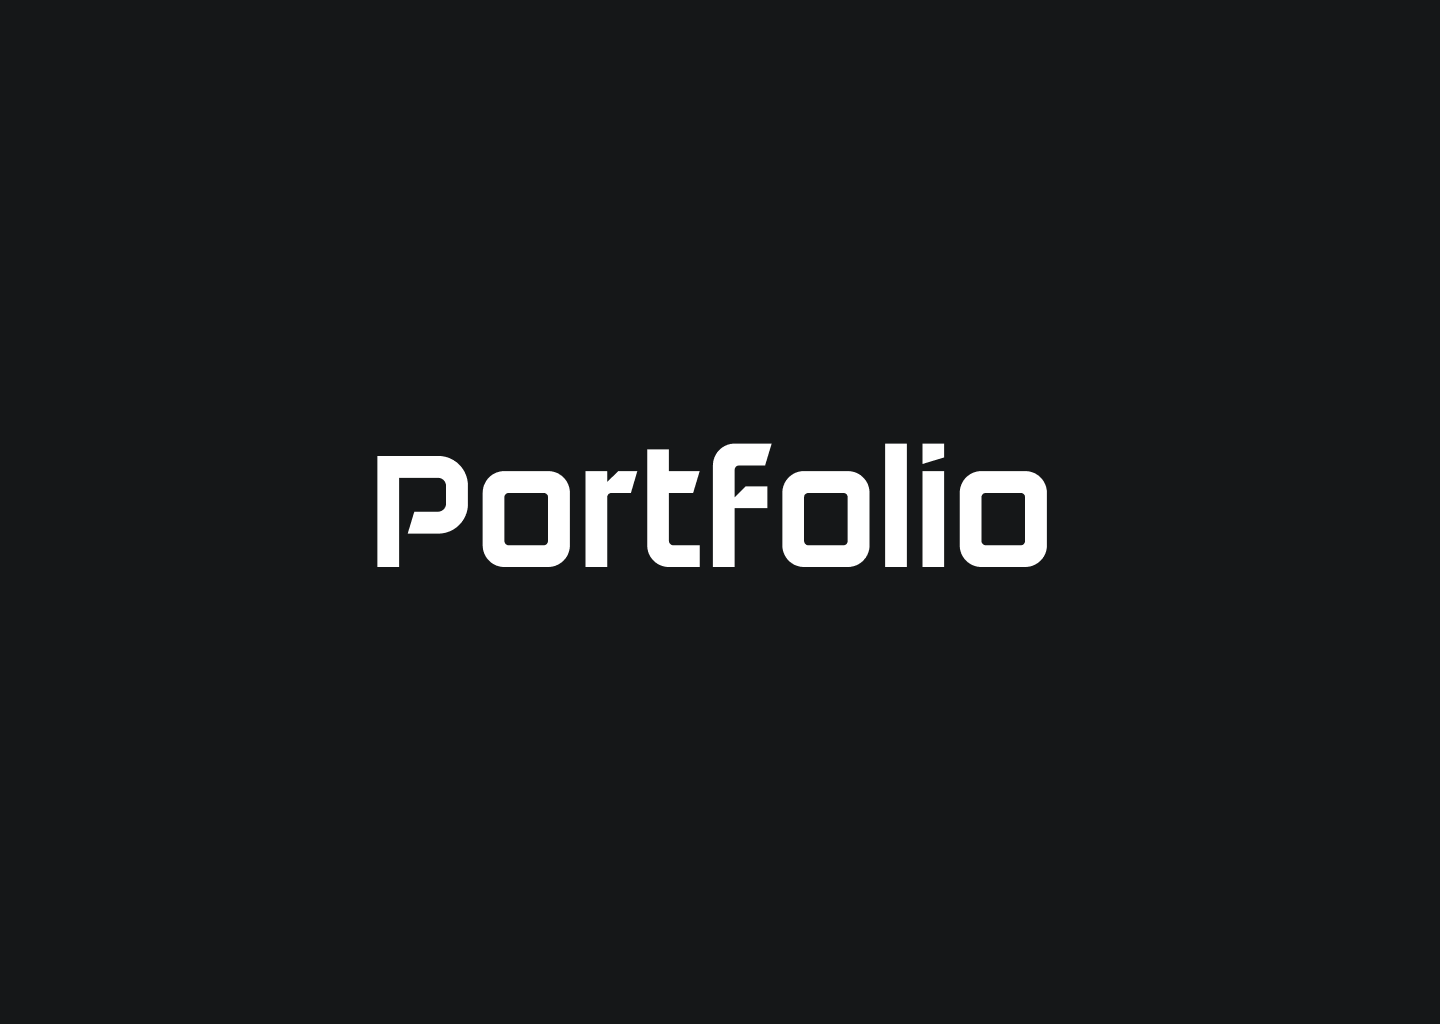 Cover Image for Portfolio: A New Asset Management Primitive